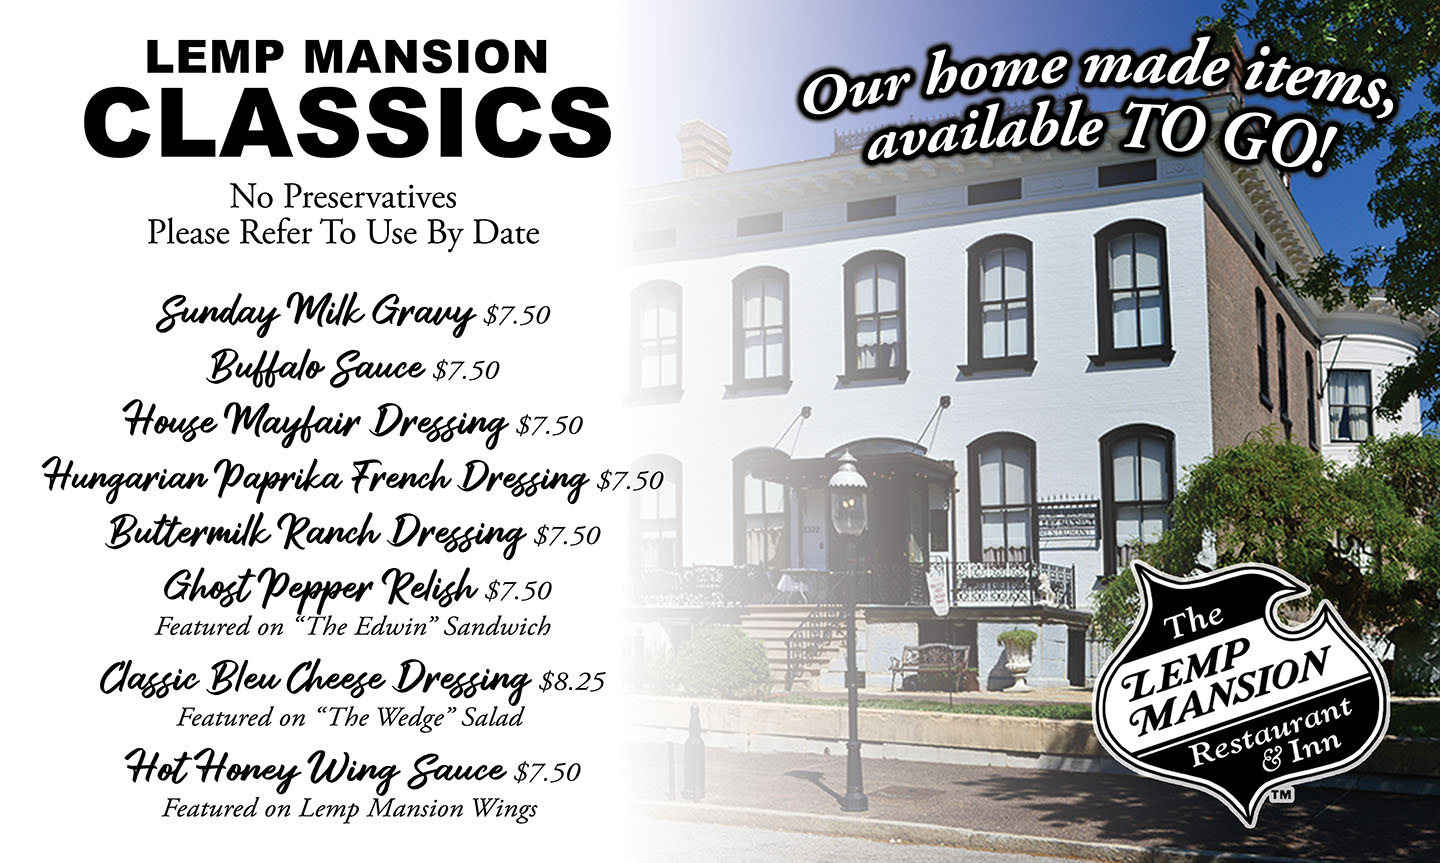 Lemp Mansion Classics to go